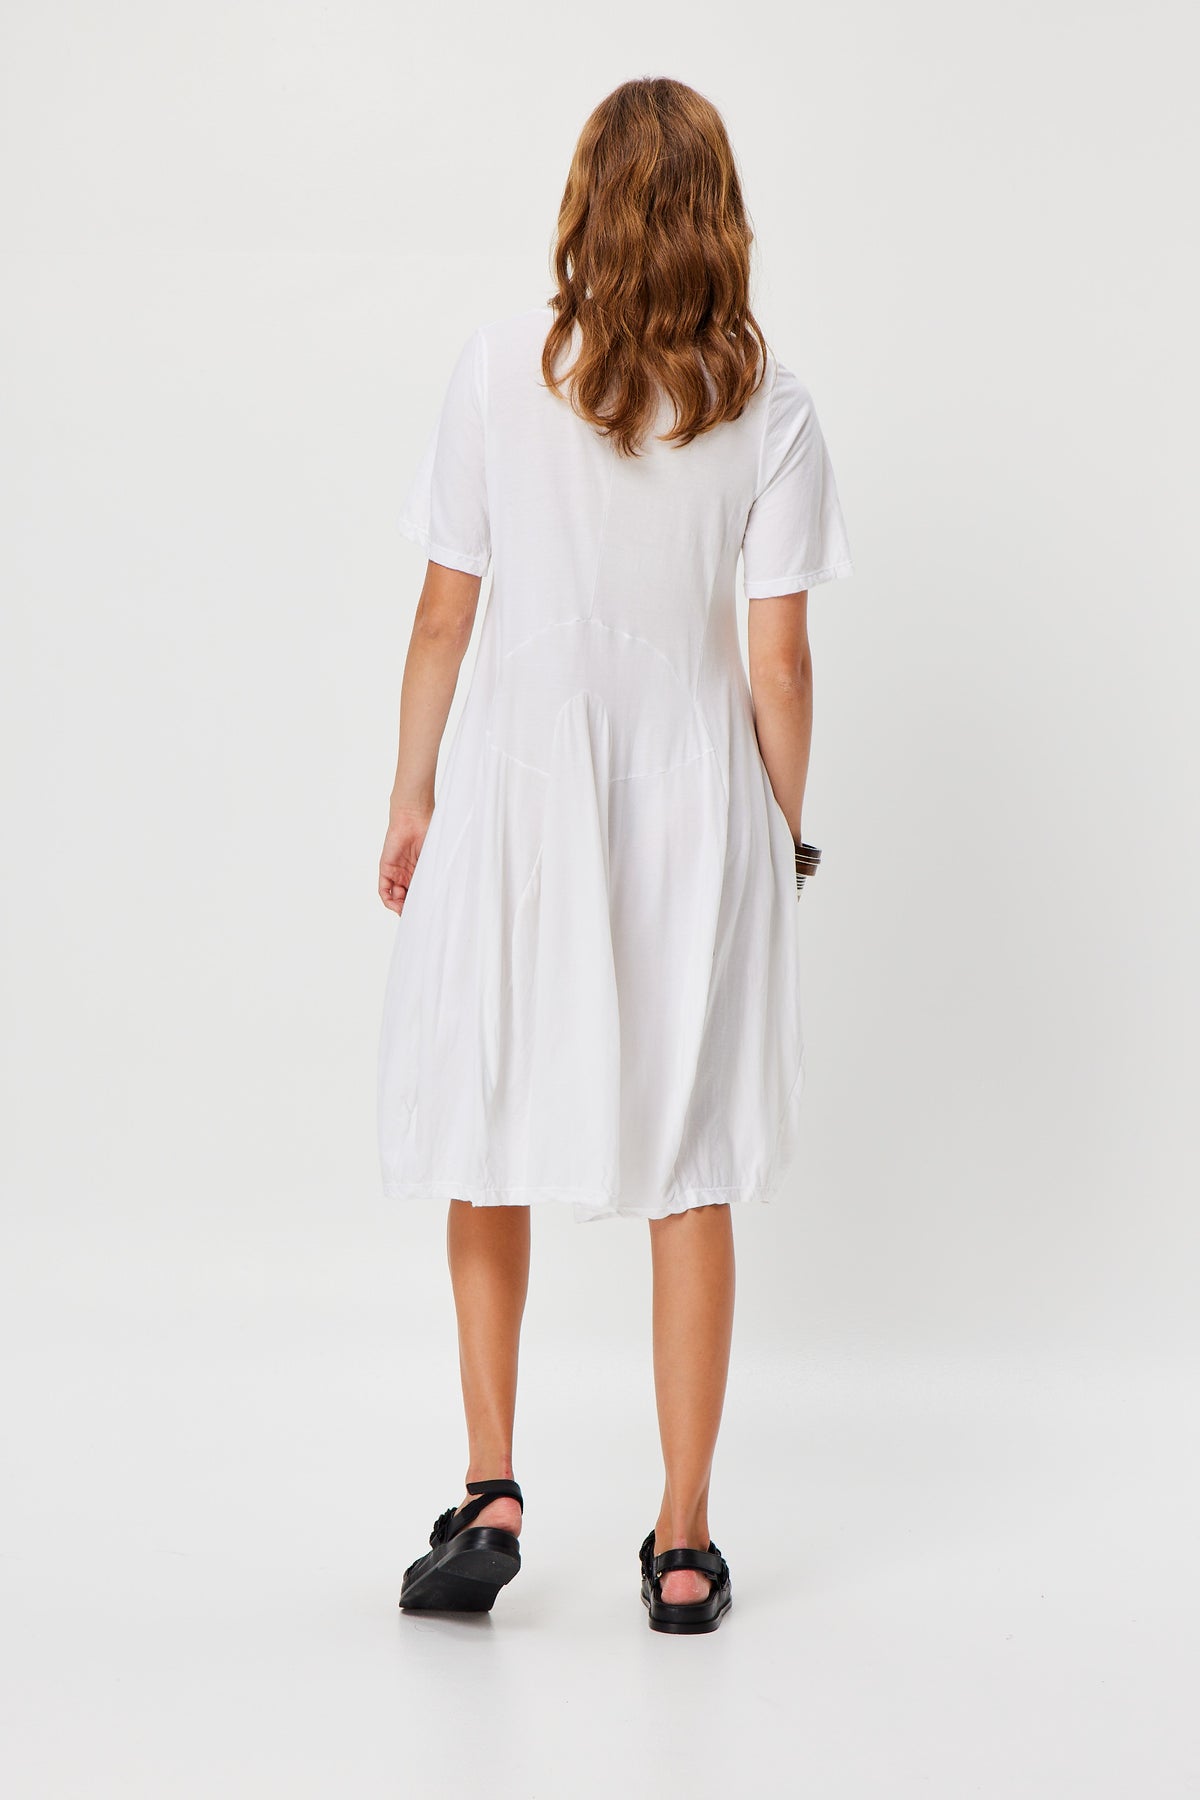 Valia Tilly Dress White VC069